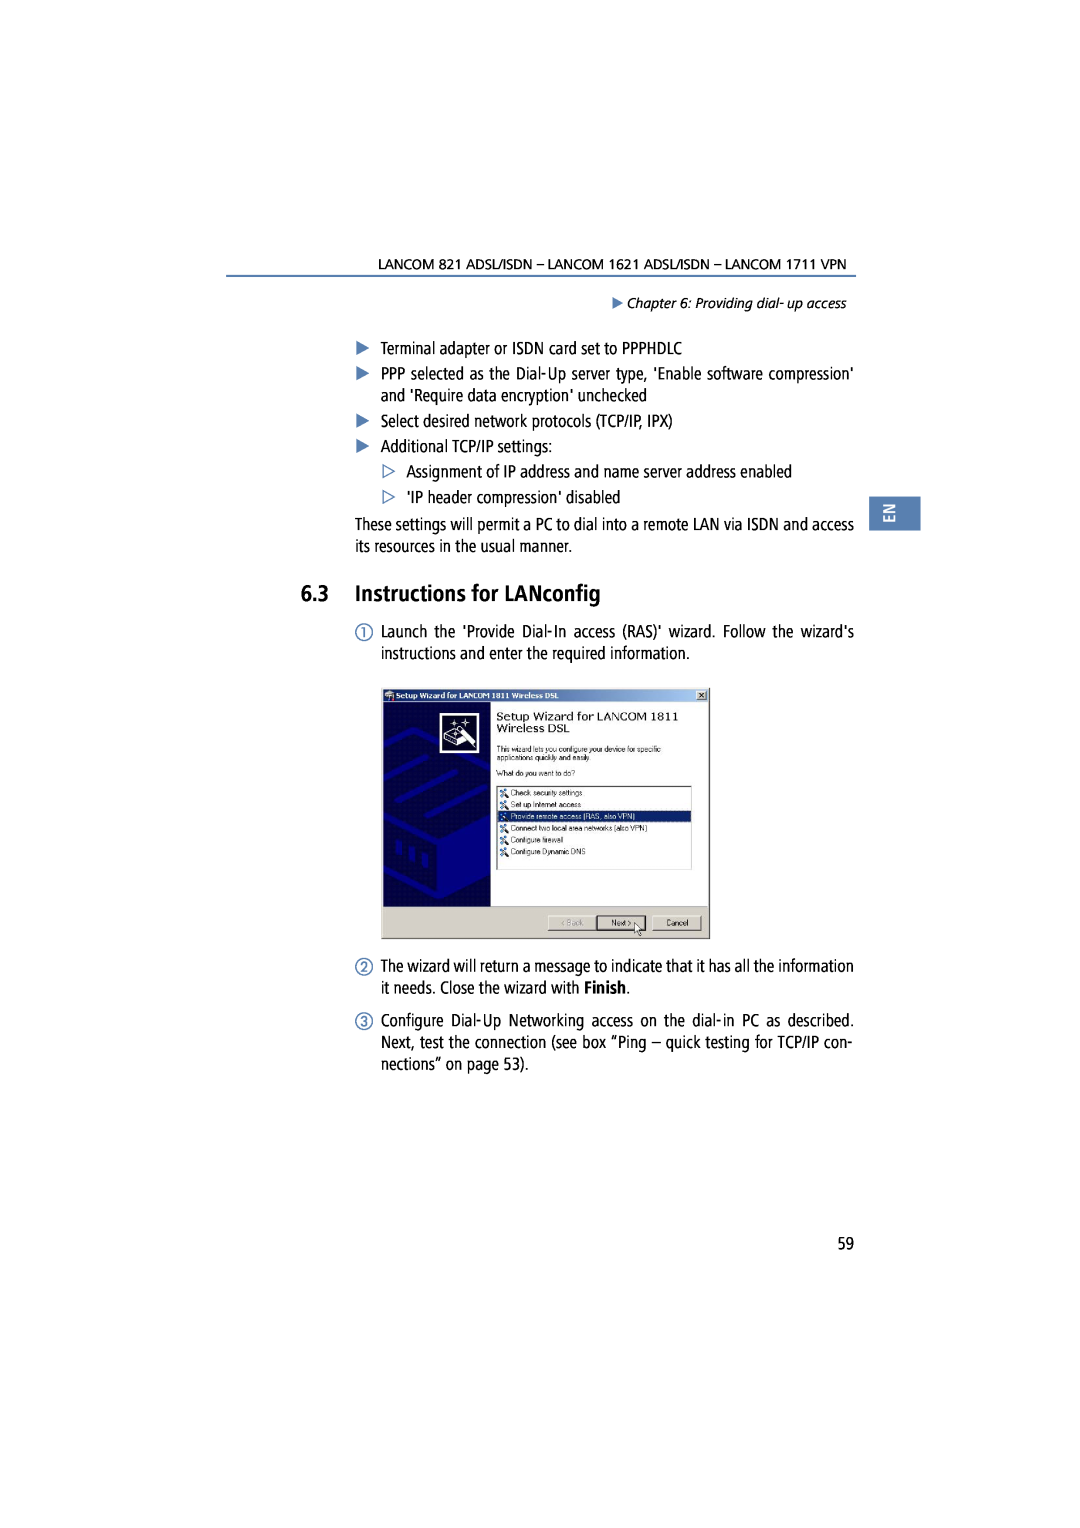 Lancom Systems 1621, 821, 1711 manual Instructions for LANconfig 